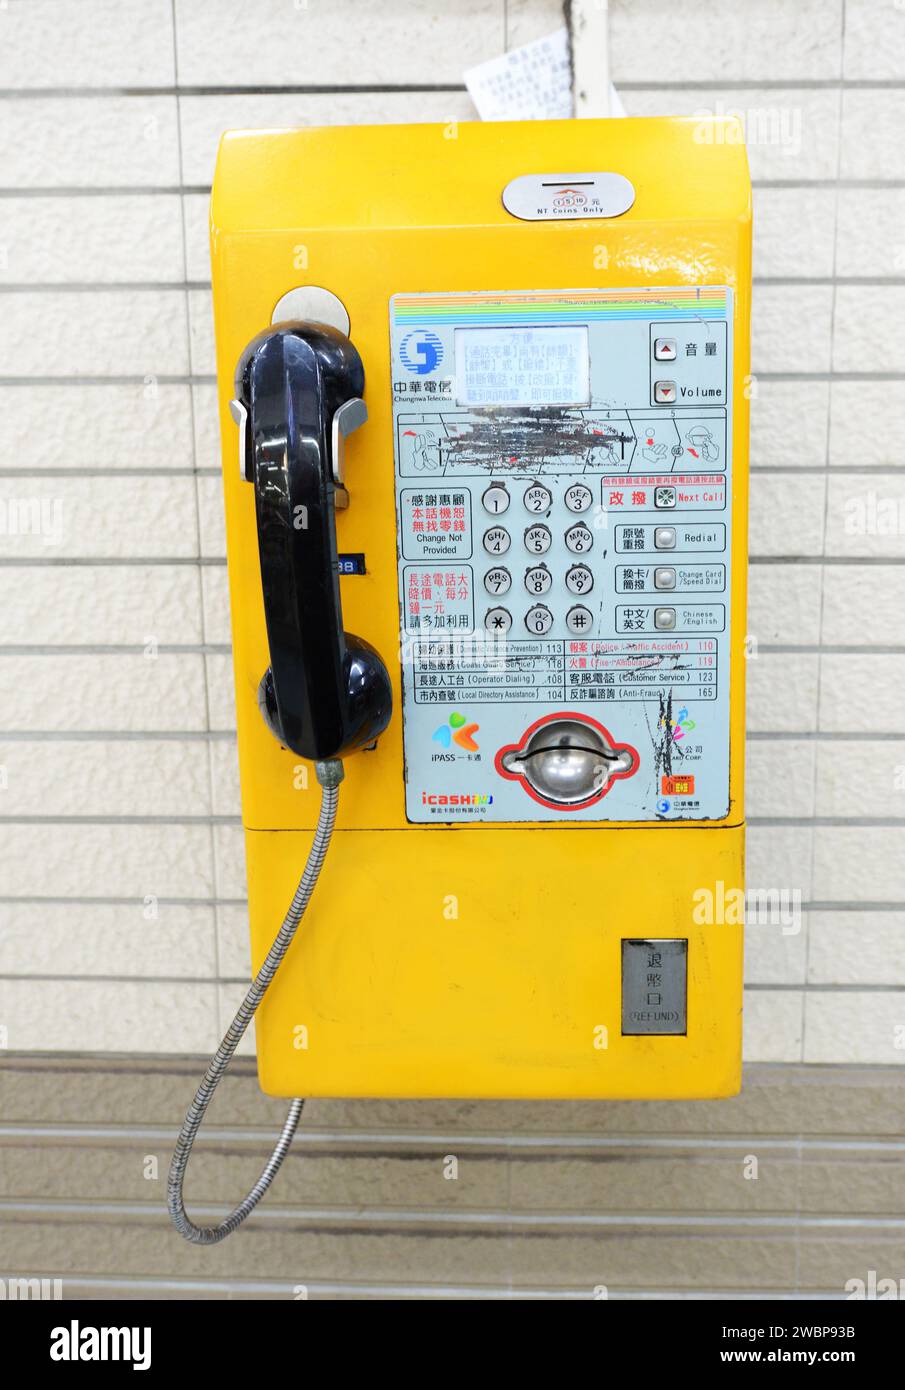 Un téléphone public taïwanais à Taipei, Taiwan. Banque D'Images